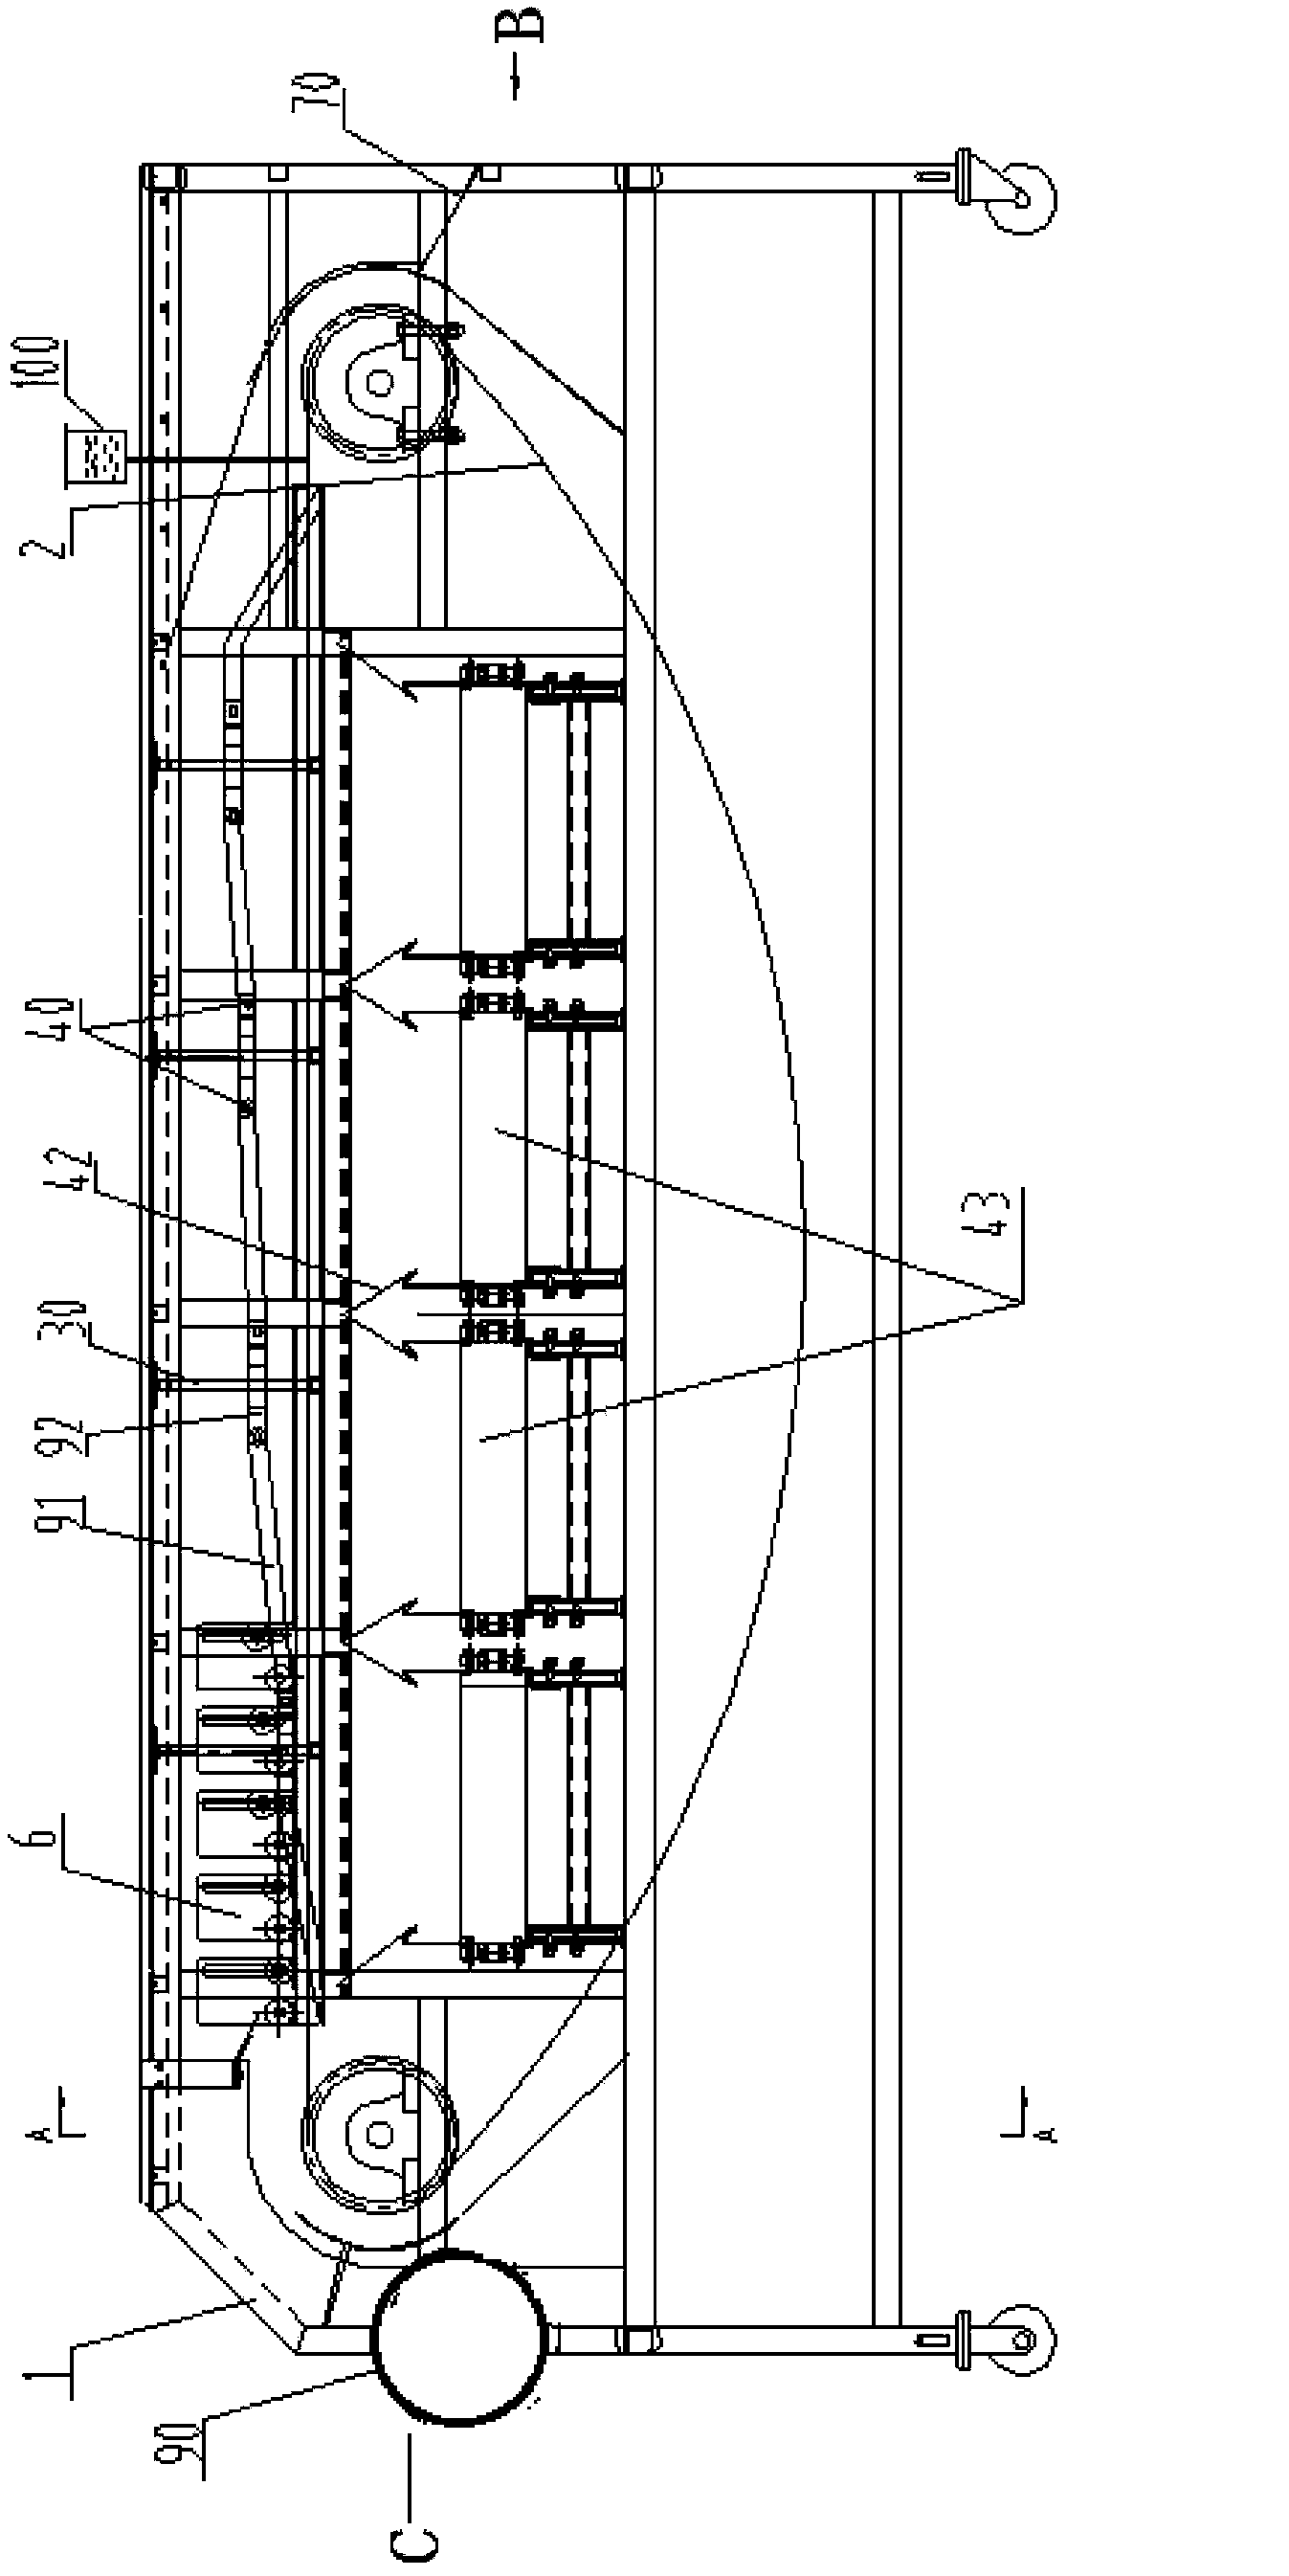 Diameter grading system for rhizome material